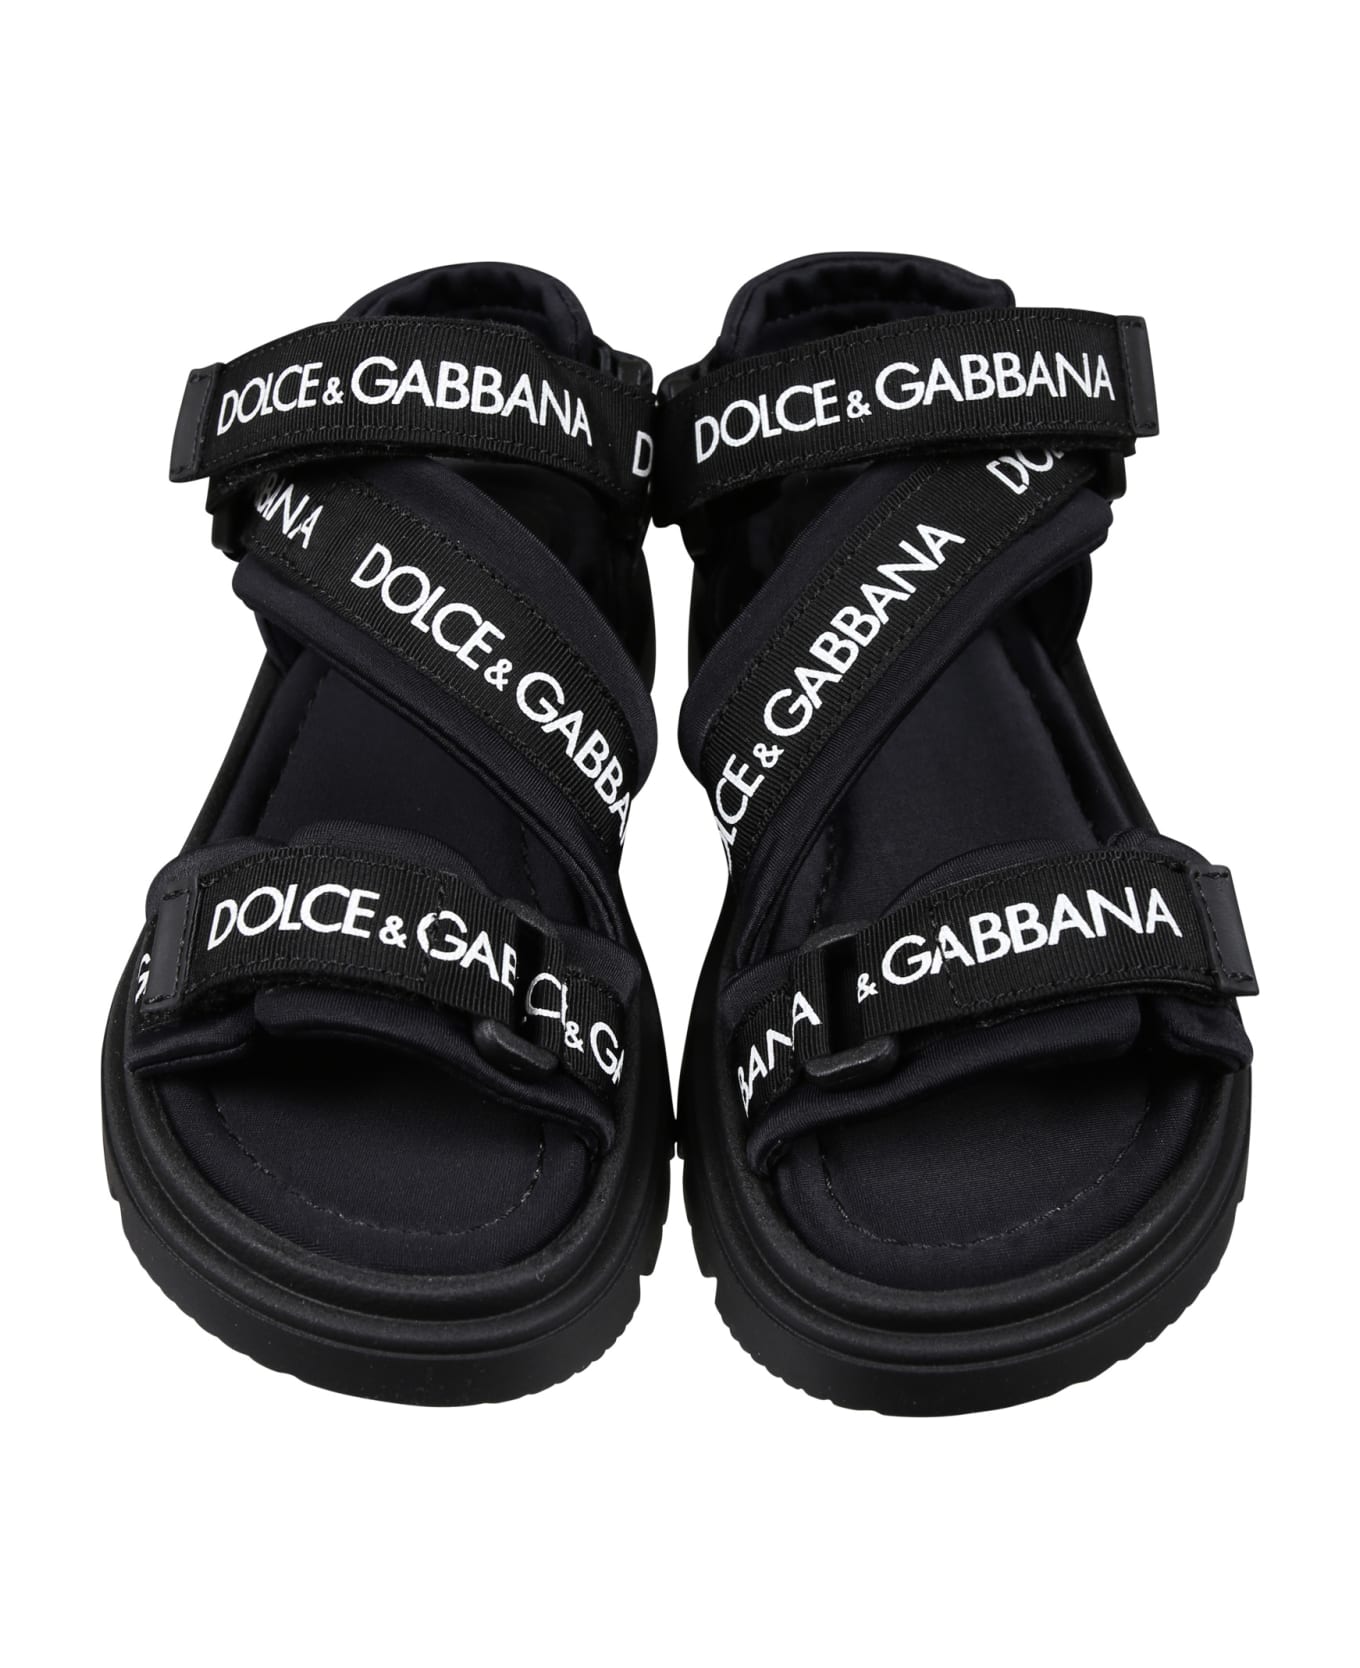 Dolce & Gabbana Black Sandals For Kids With Logo - Black シューズ